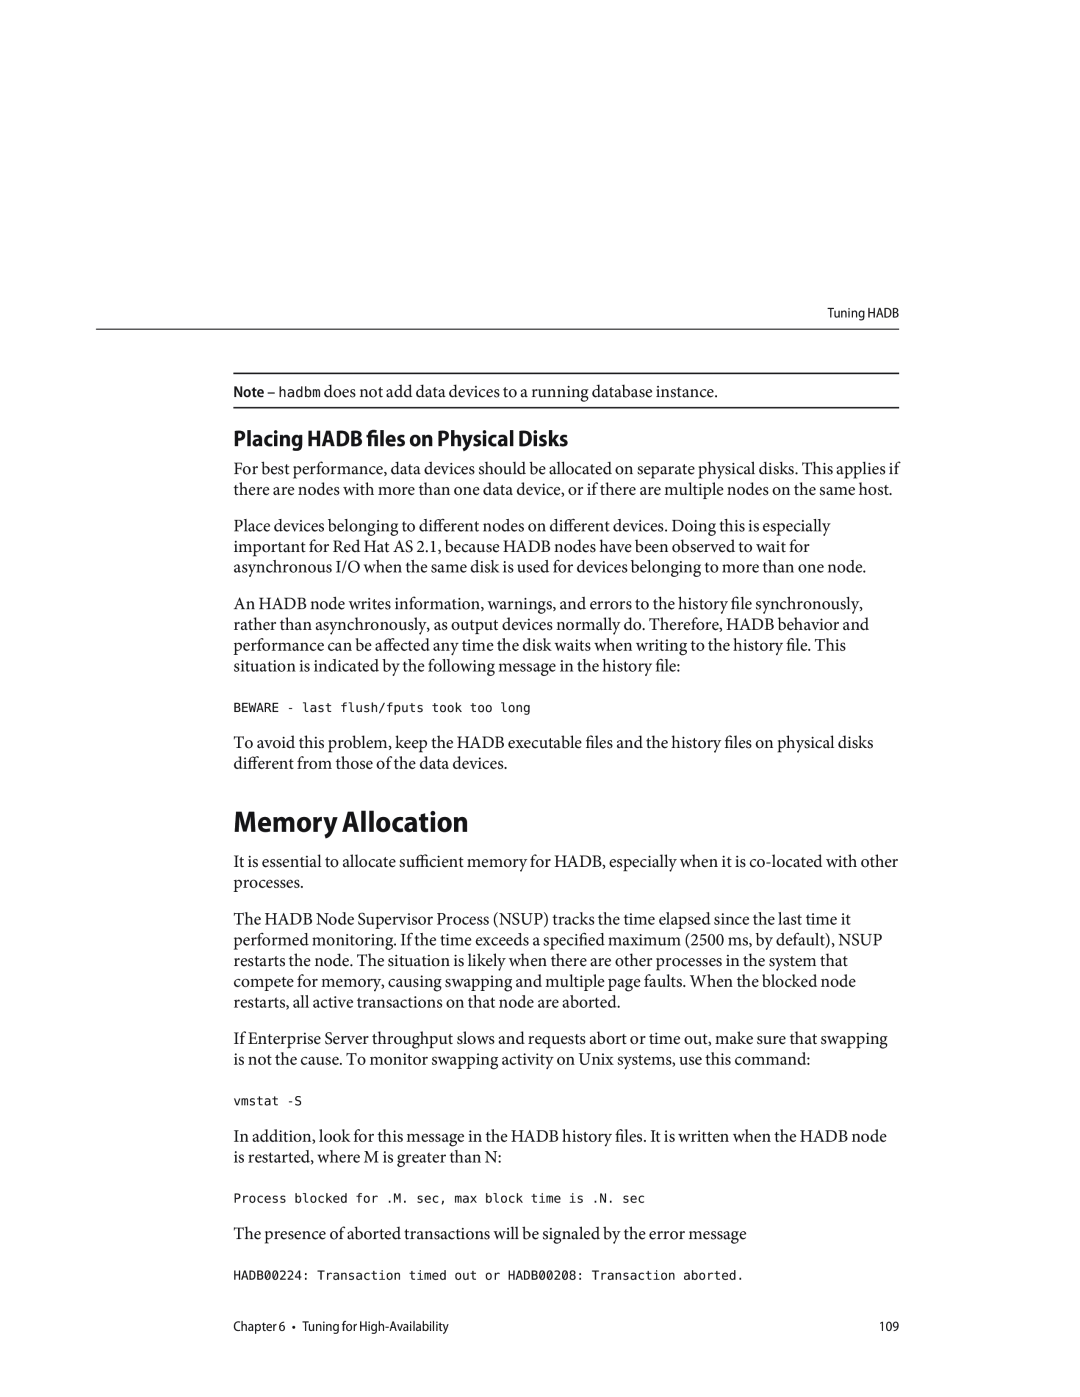 Sun Microsystems 820434310 manual Memory Allocation, Placing HADB files on Physical Disks 